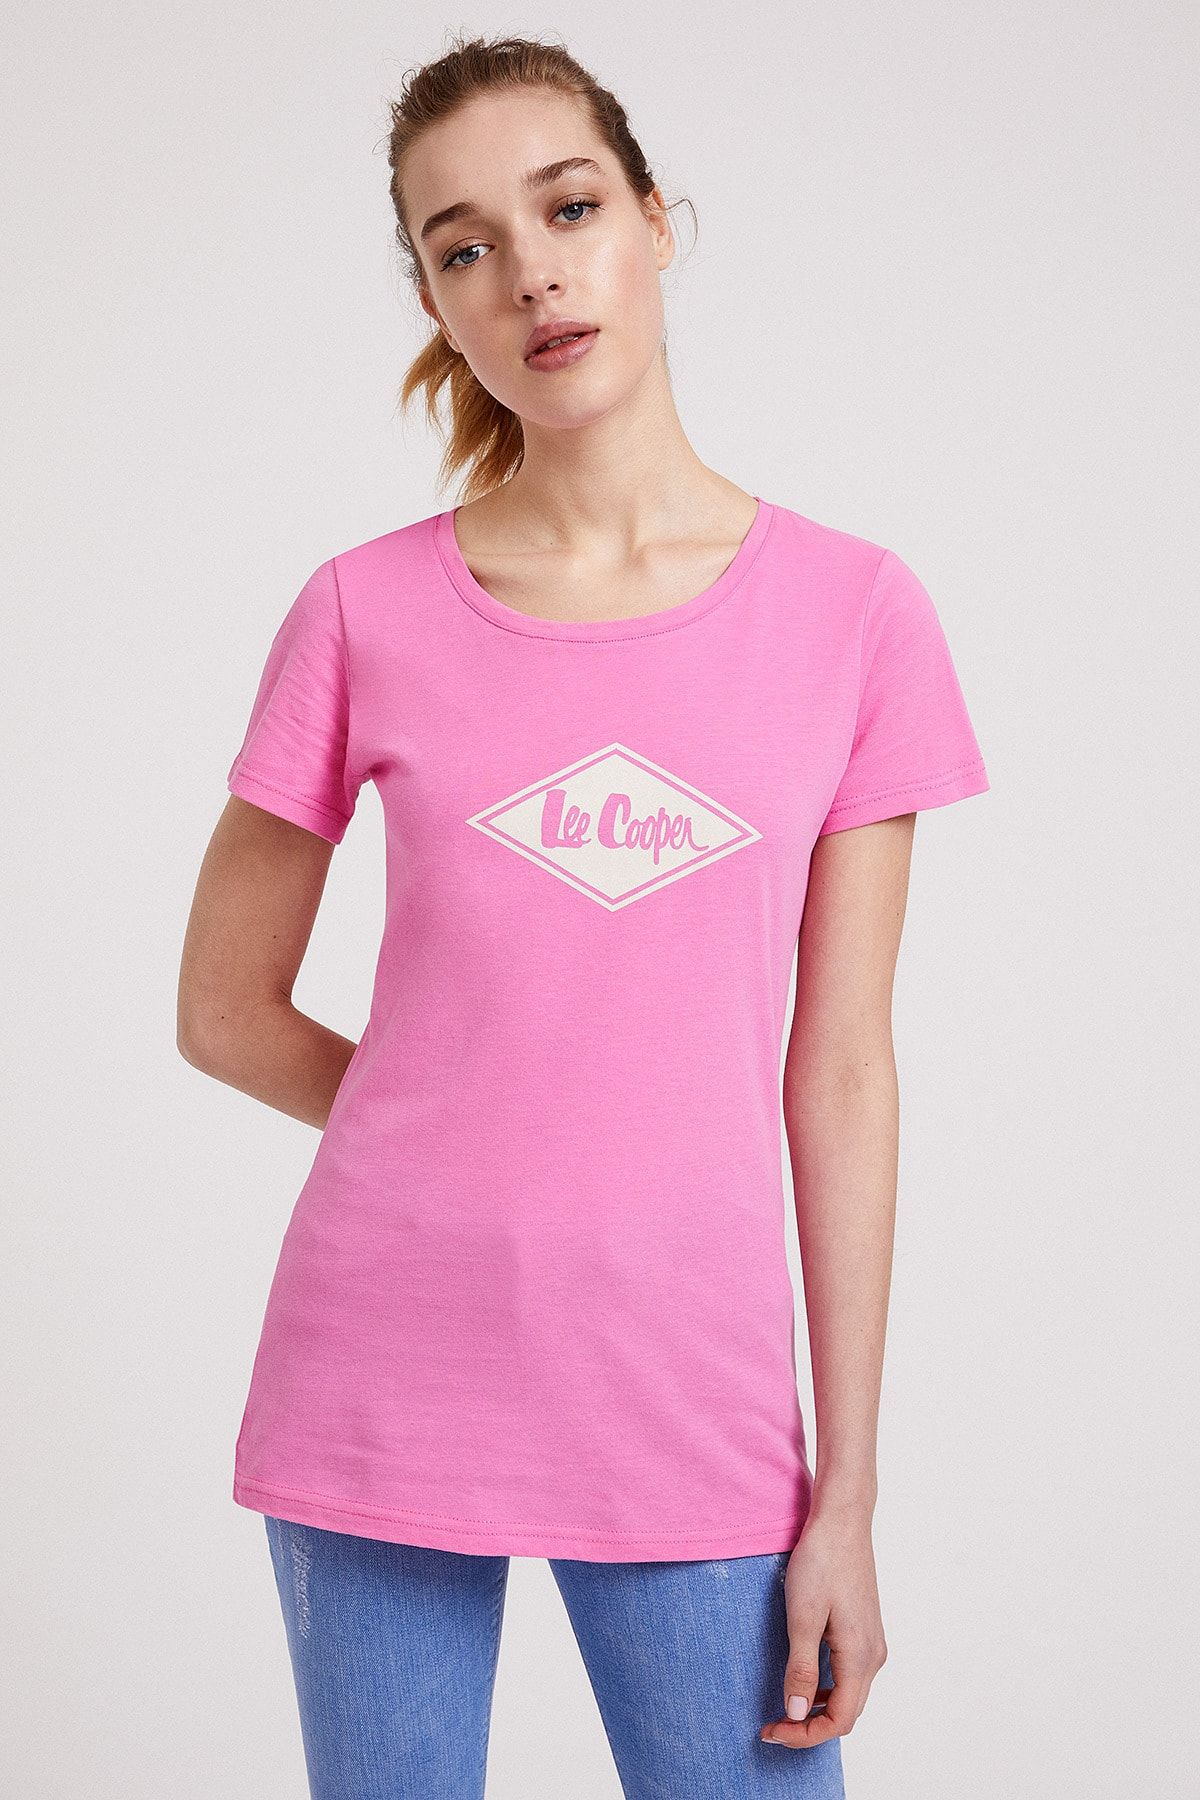 Lee Cooper Kadın Jade O Yaka T-Shirt Pembe 202 LCF 242012